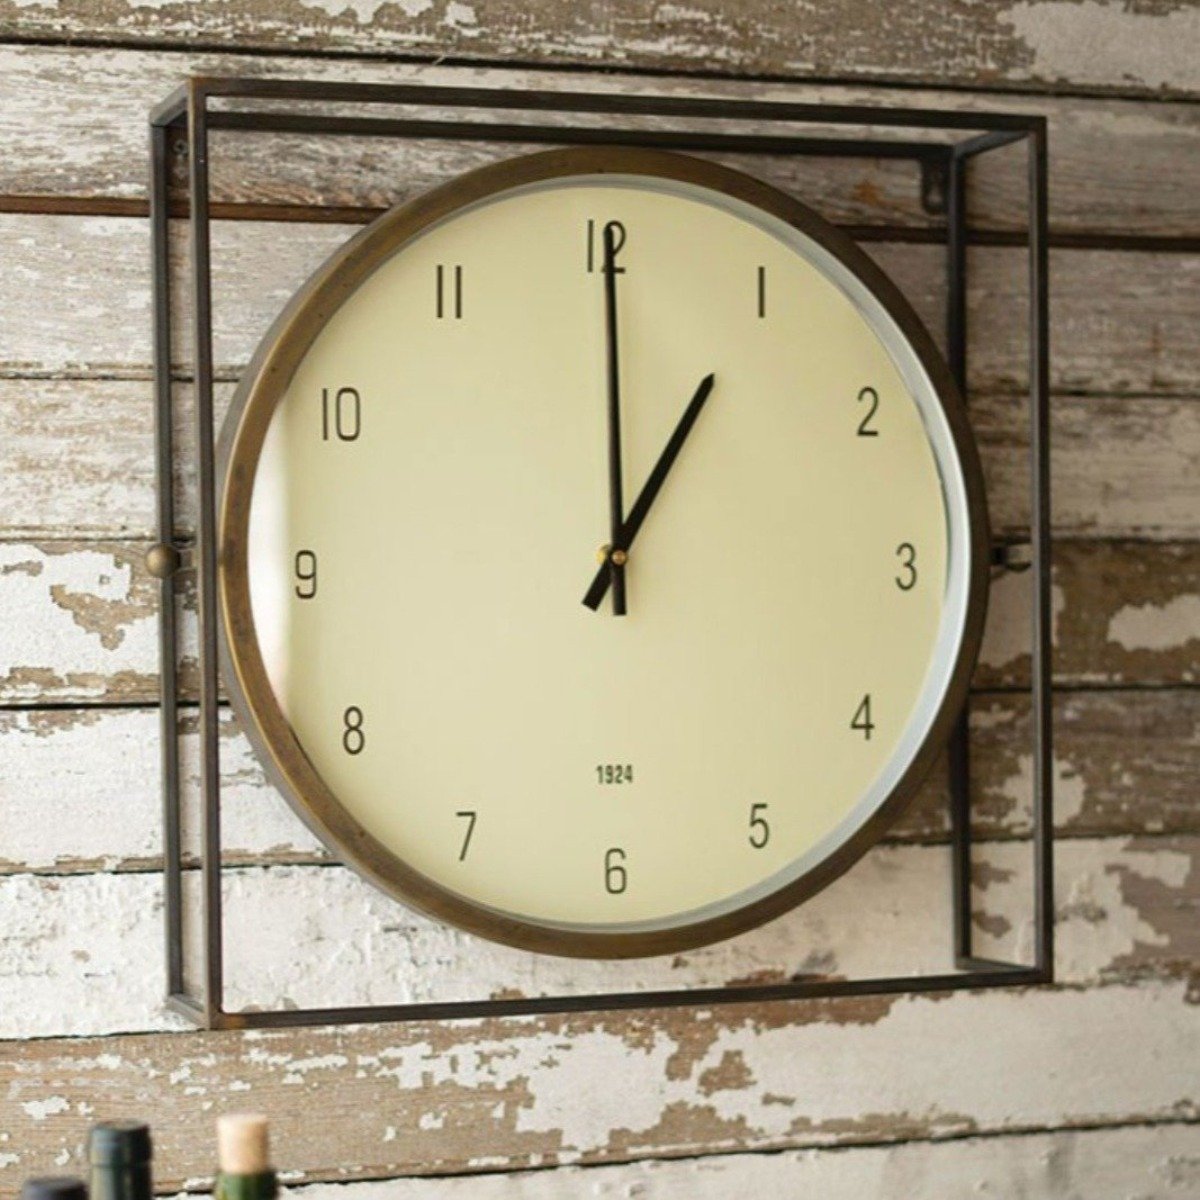 Urban Home Wall Clock-Wall | Iron Accents